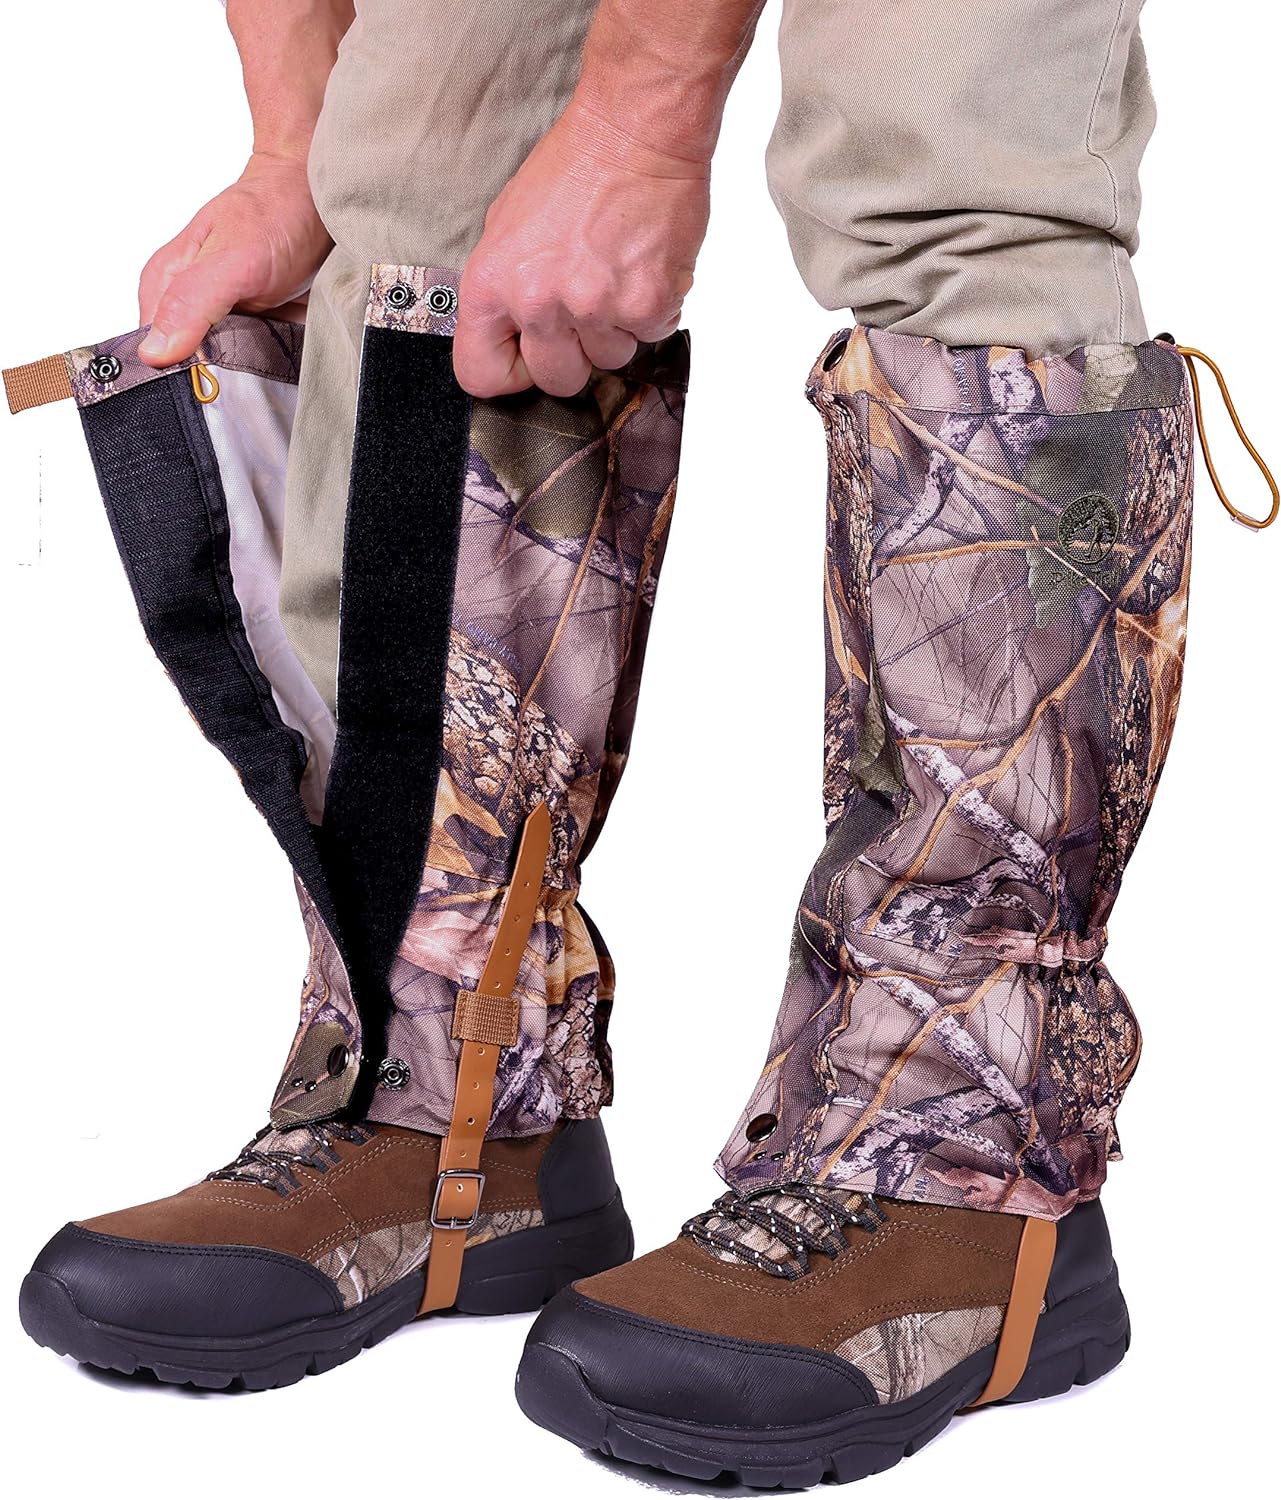 Pike Trail Leg Gaiters Waterproof Adjustable Snow Boot Gaiters for Hiking, Walking, Hunting, Mountain Climbing, Snowshoeing